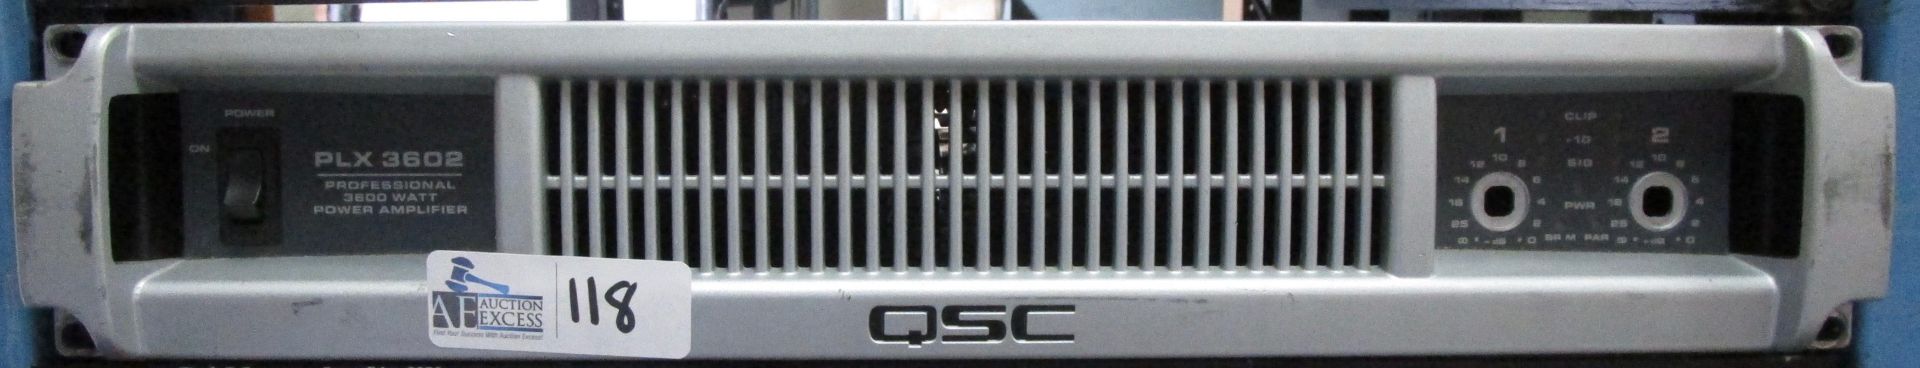 QSC PLX-3602 VOLUME CONTROL KNOBS MISSING